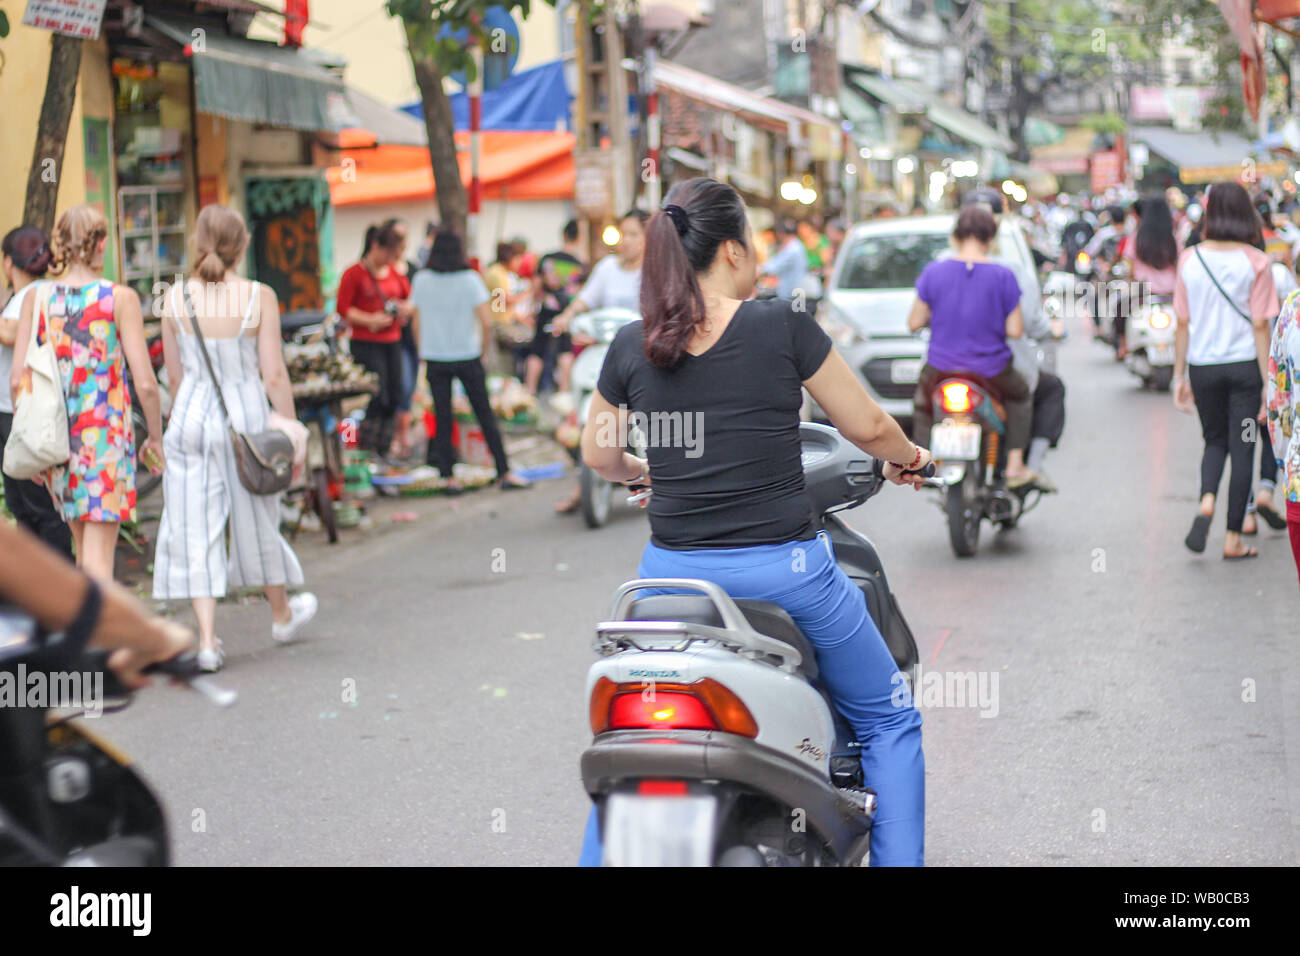 A woman is riding on motorbikes in Hanoi, Vietnam. Stock Photo